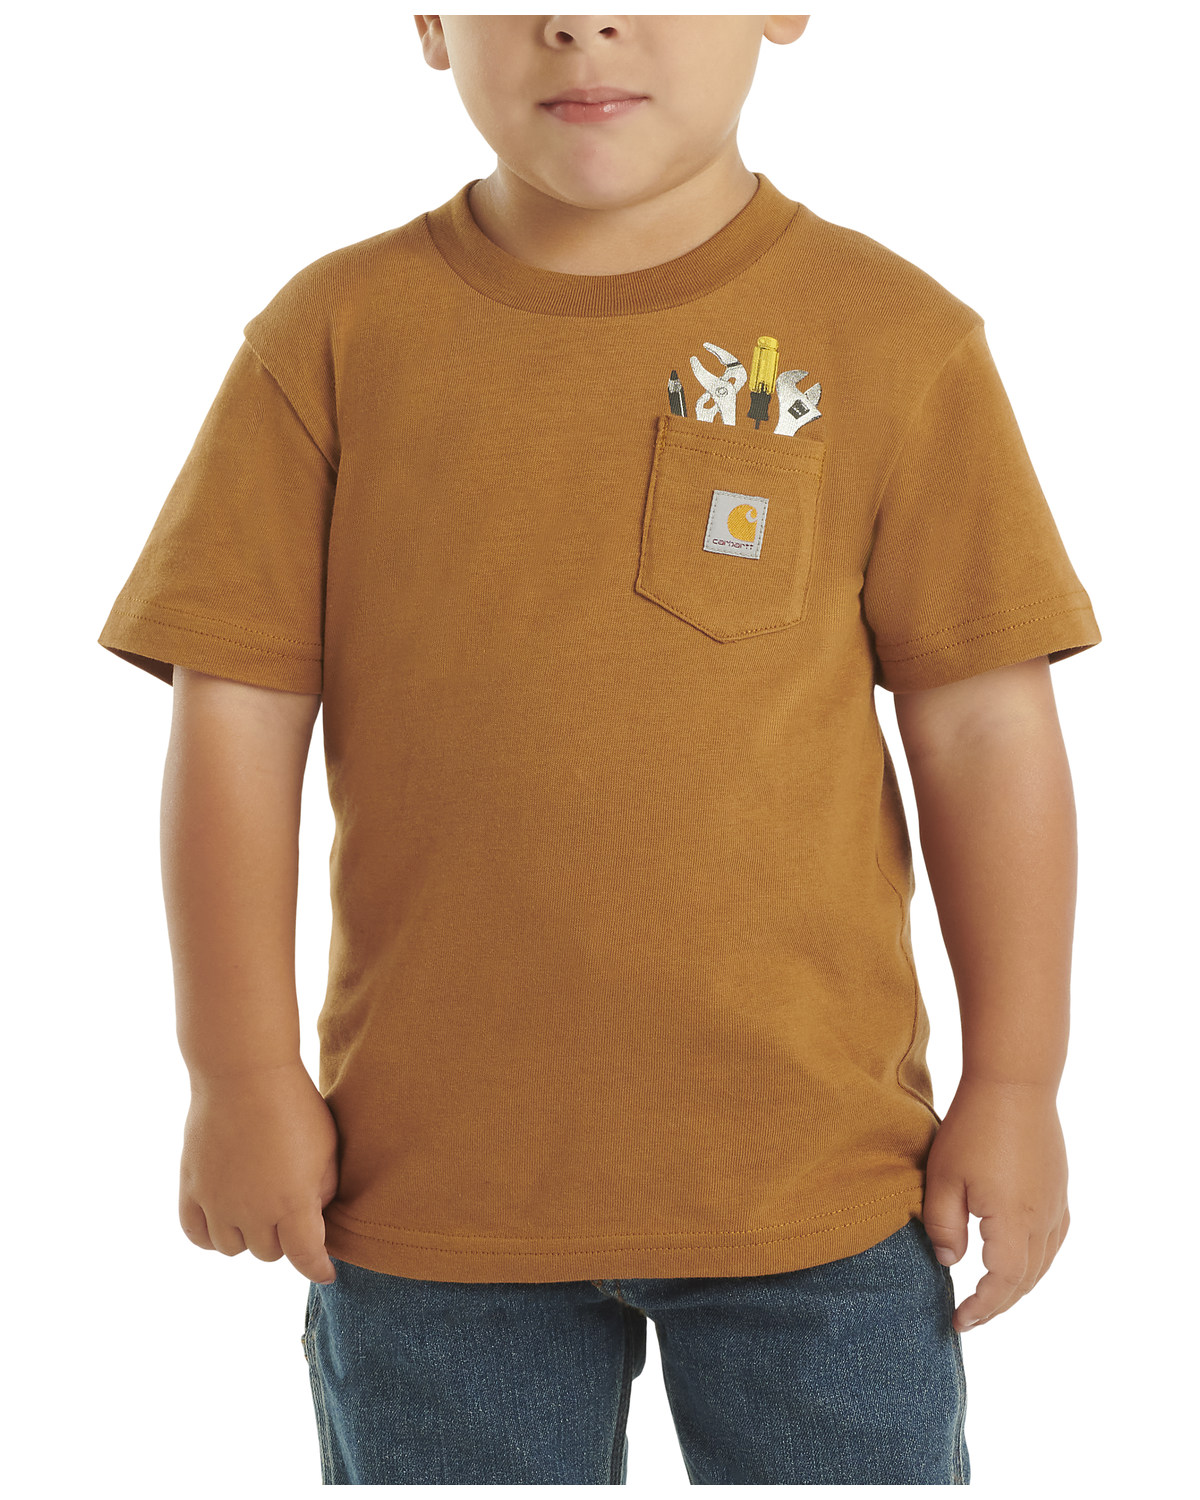 Carhartt Toddler Boys' Tool Pocket Short Sleeve Graphic T-Shirt